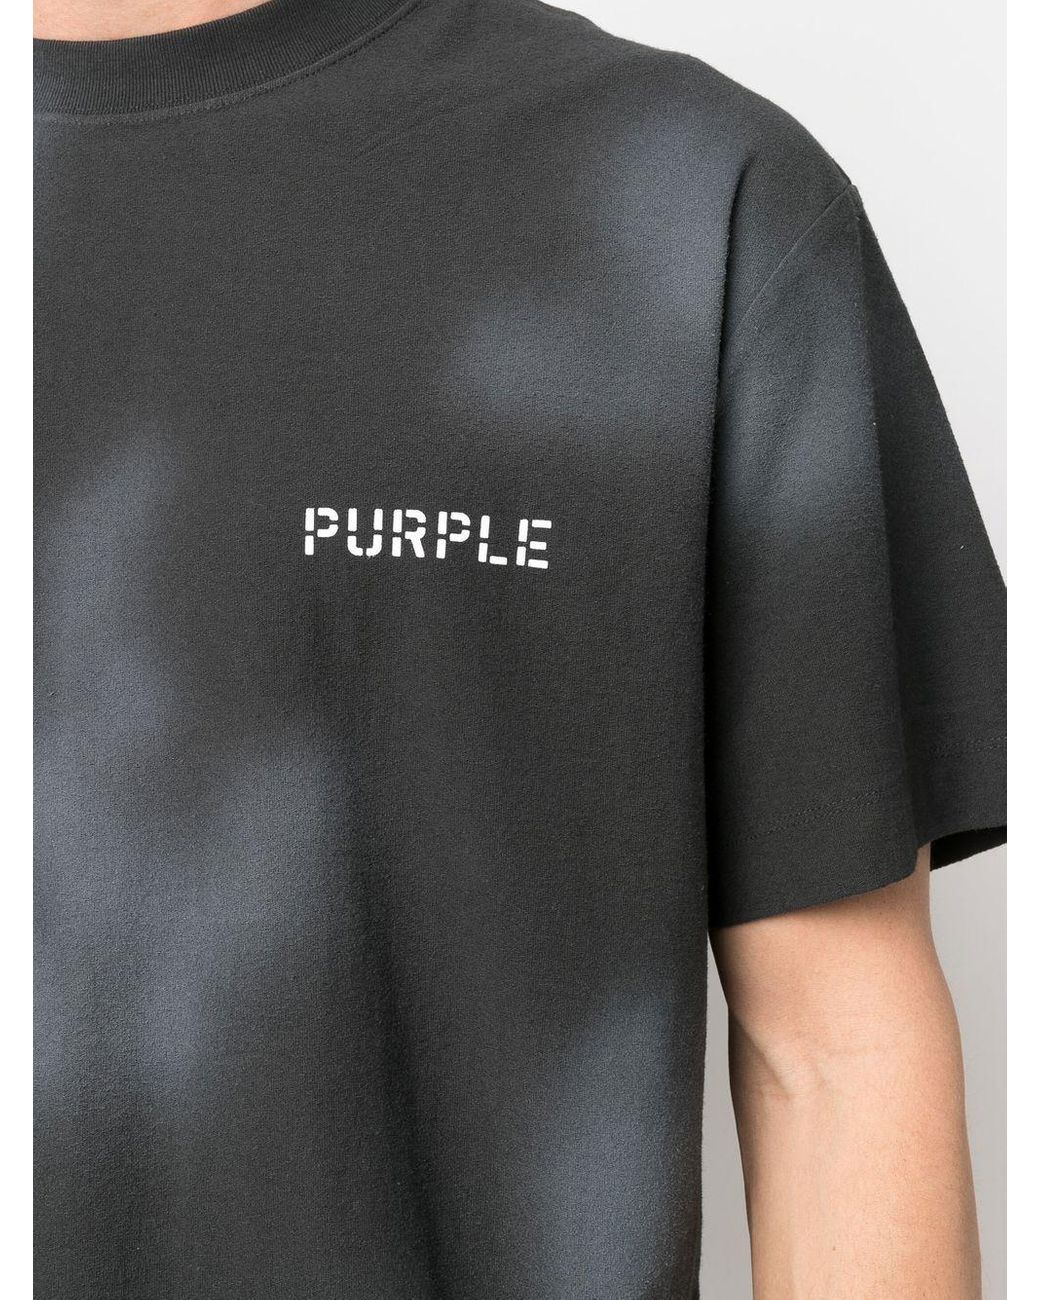 PURPLE BRAND Tie Dye Logo Graphic T-Shirt